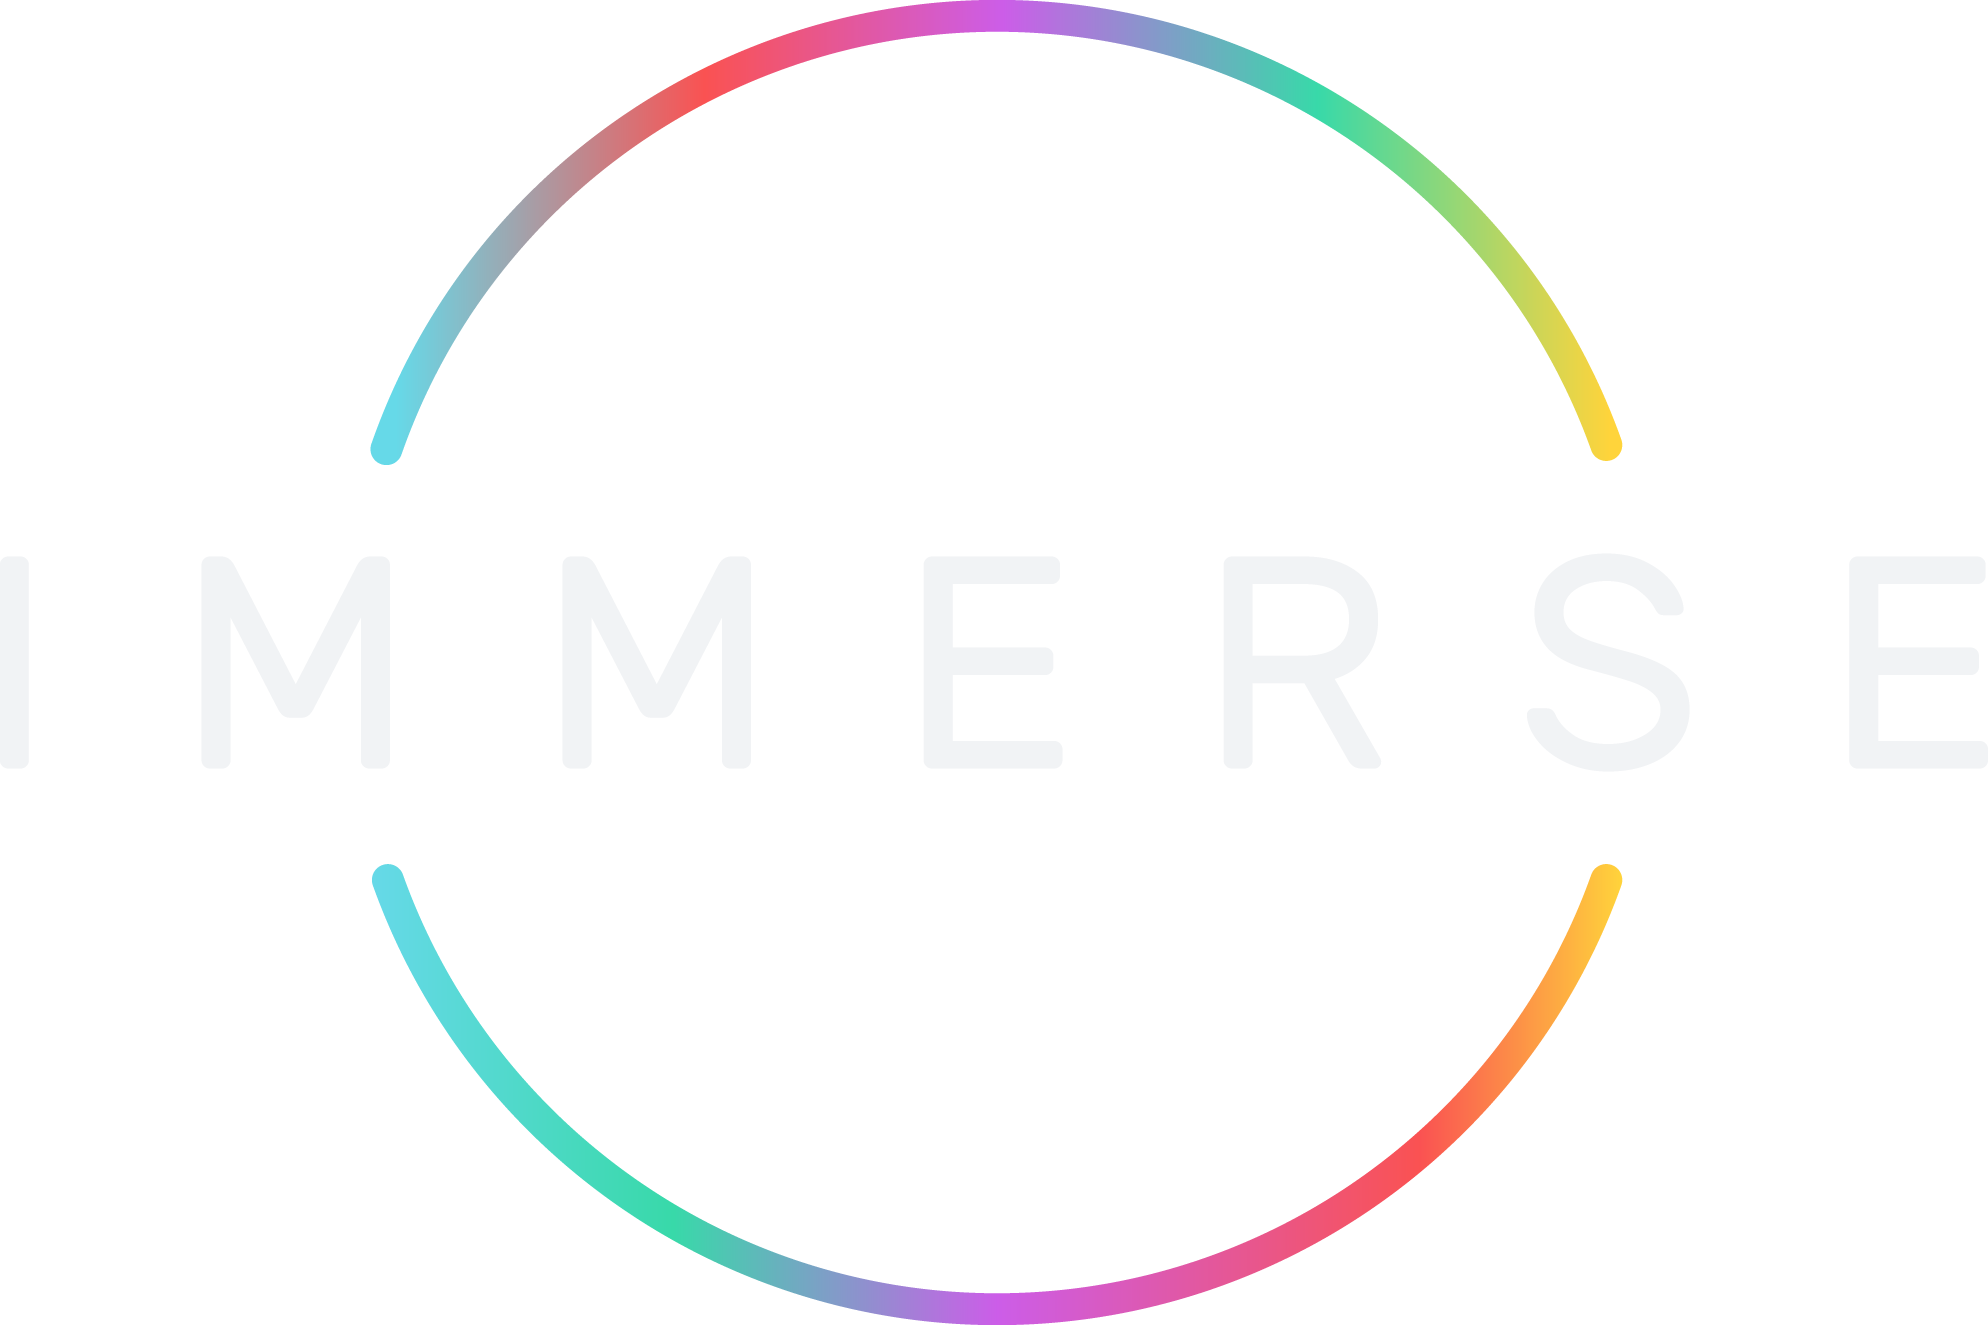 Immerse Logo